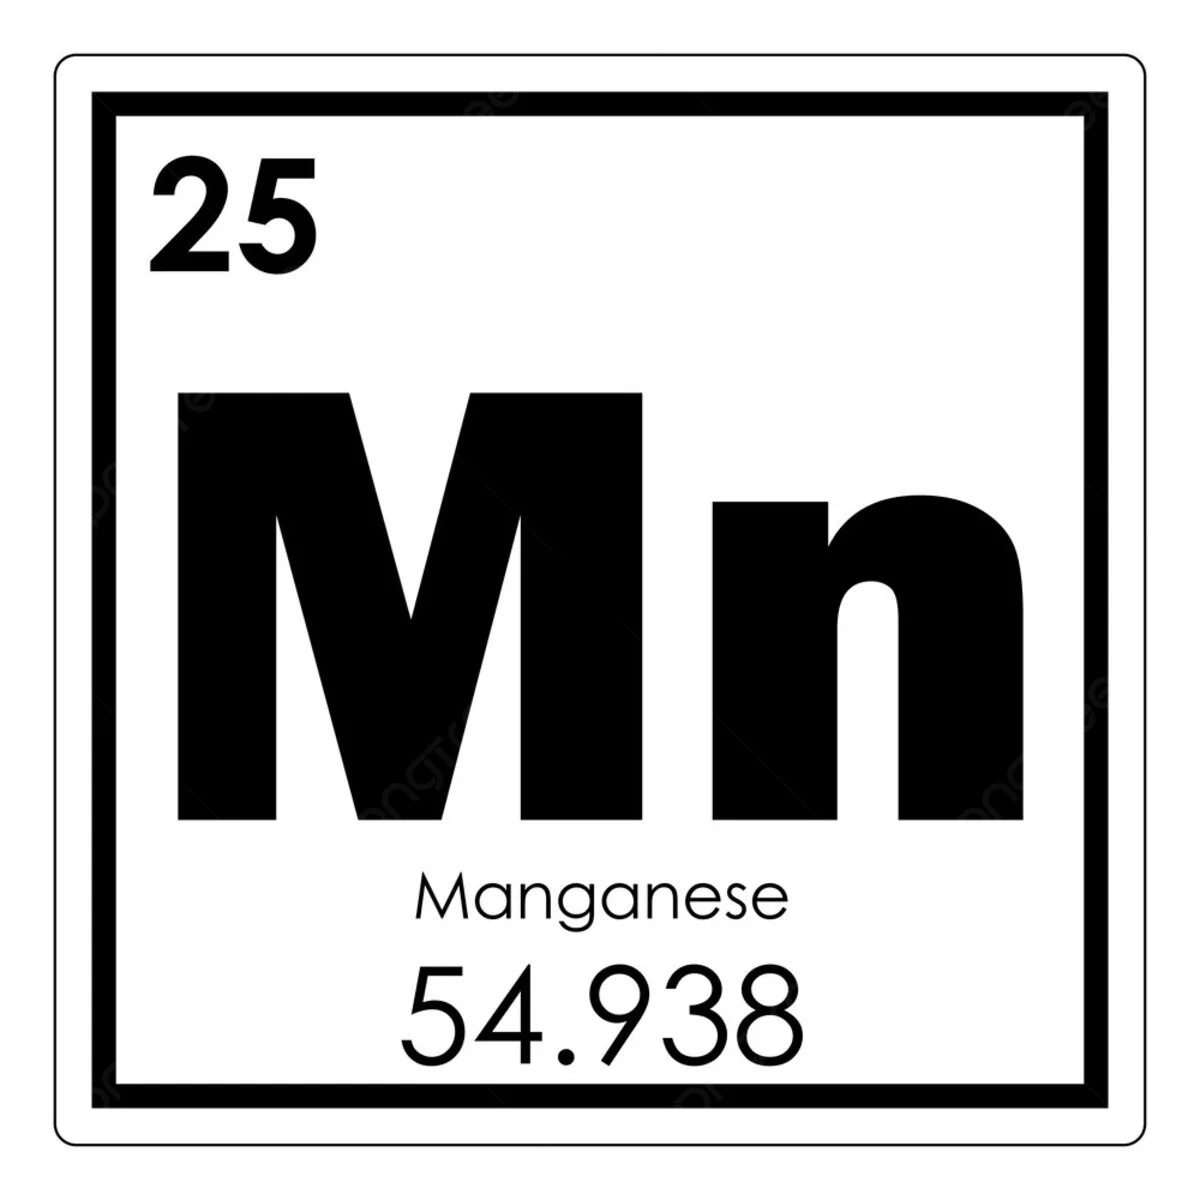 Mn элемент металл. Марганец элемент таблицы Менделеева. Марганец хим знак. Марганец химический символ. MN химический элемент.